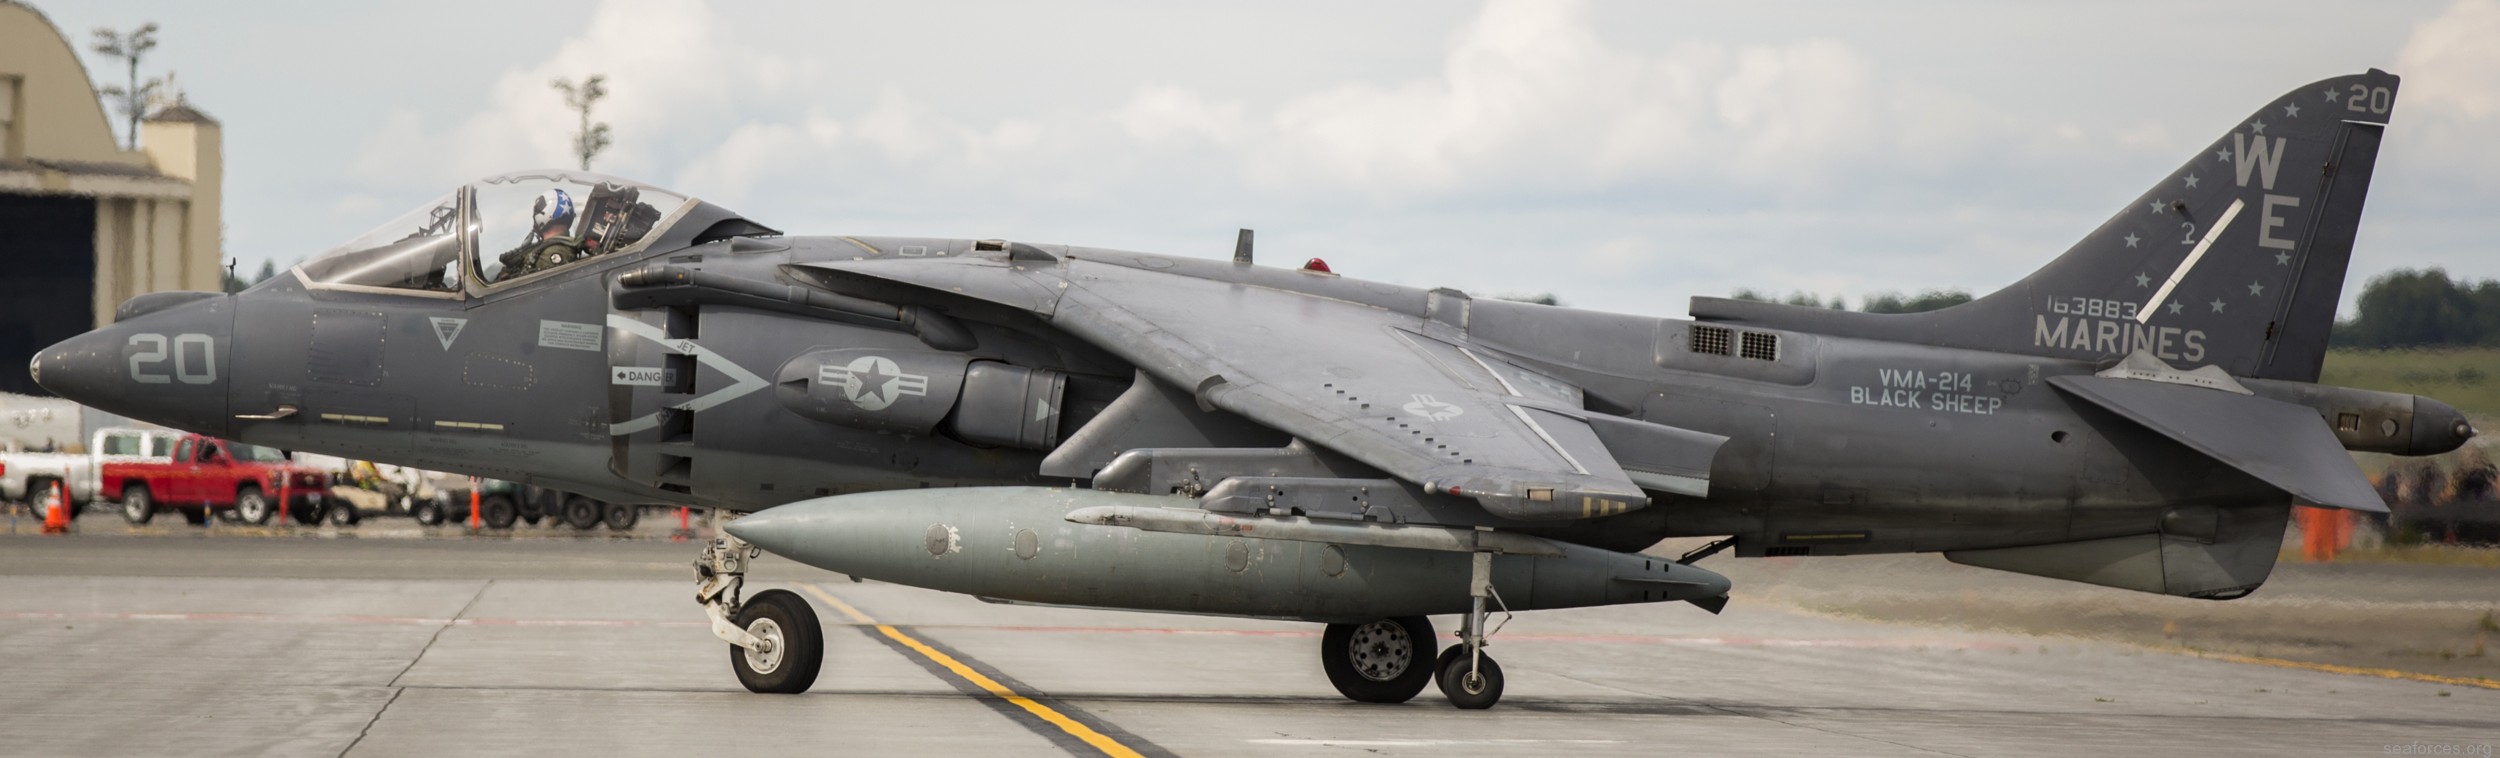 vma-214 blacksheep av-8b harrier marine attack squadron usmc 148 joint base elmendorf richardson alaska